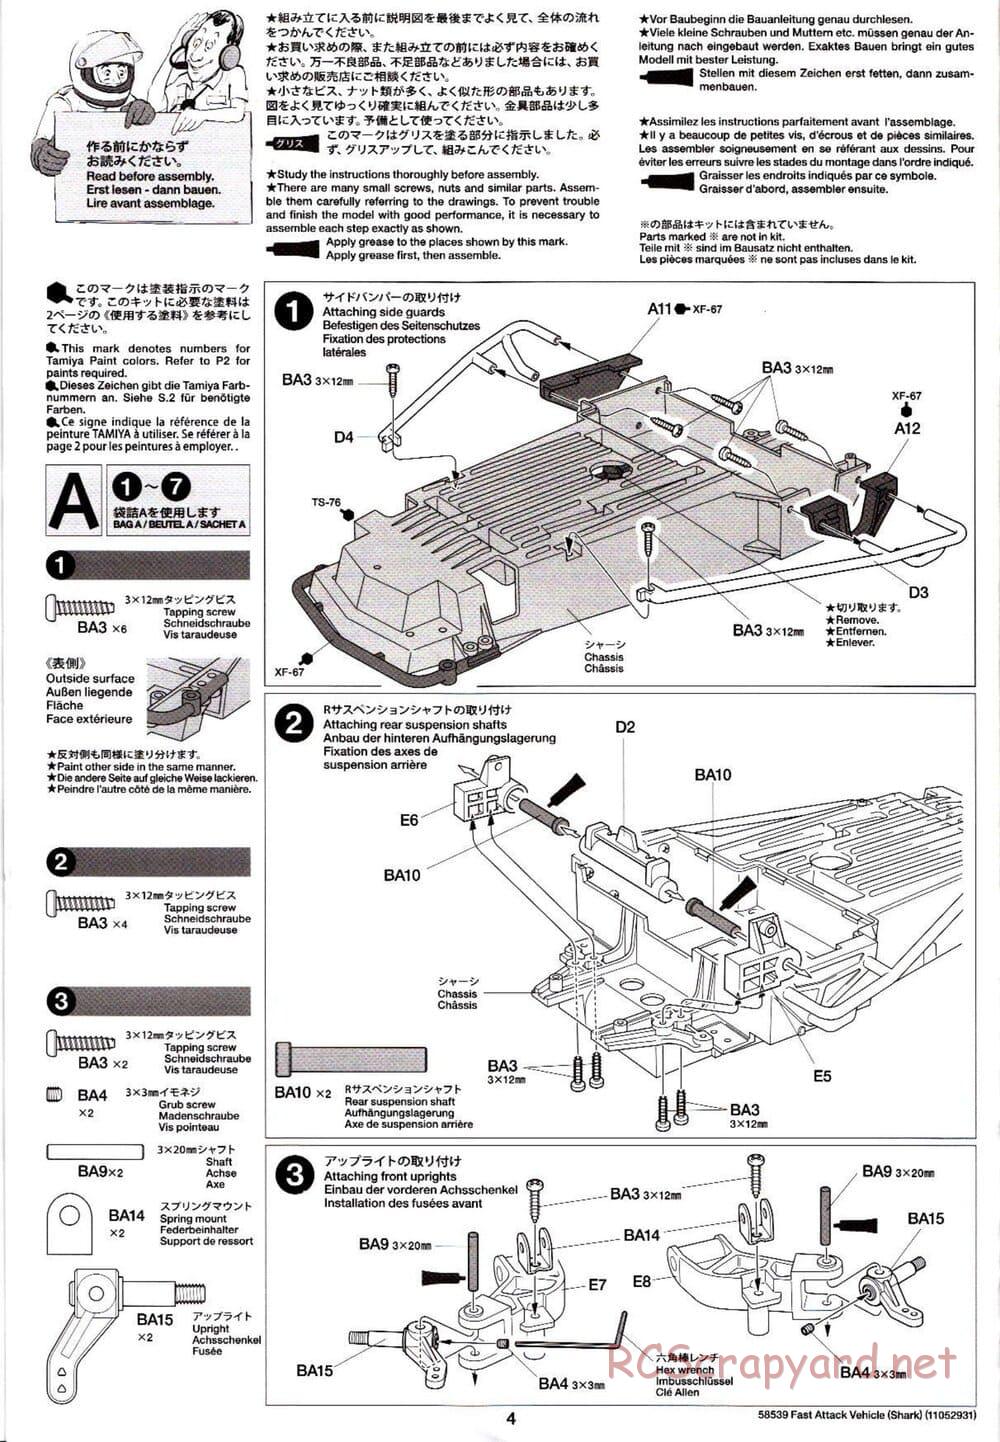 Tamiya - Fast Attack Vehicle w/ Shark Mouth - FAV Chassis - Manual - Page 4